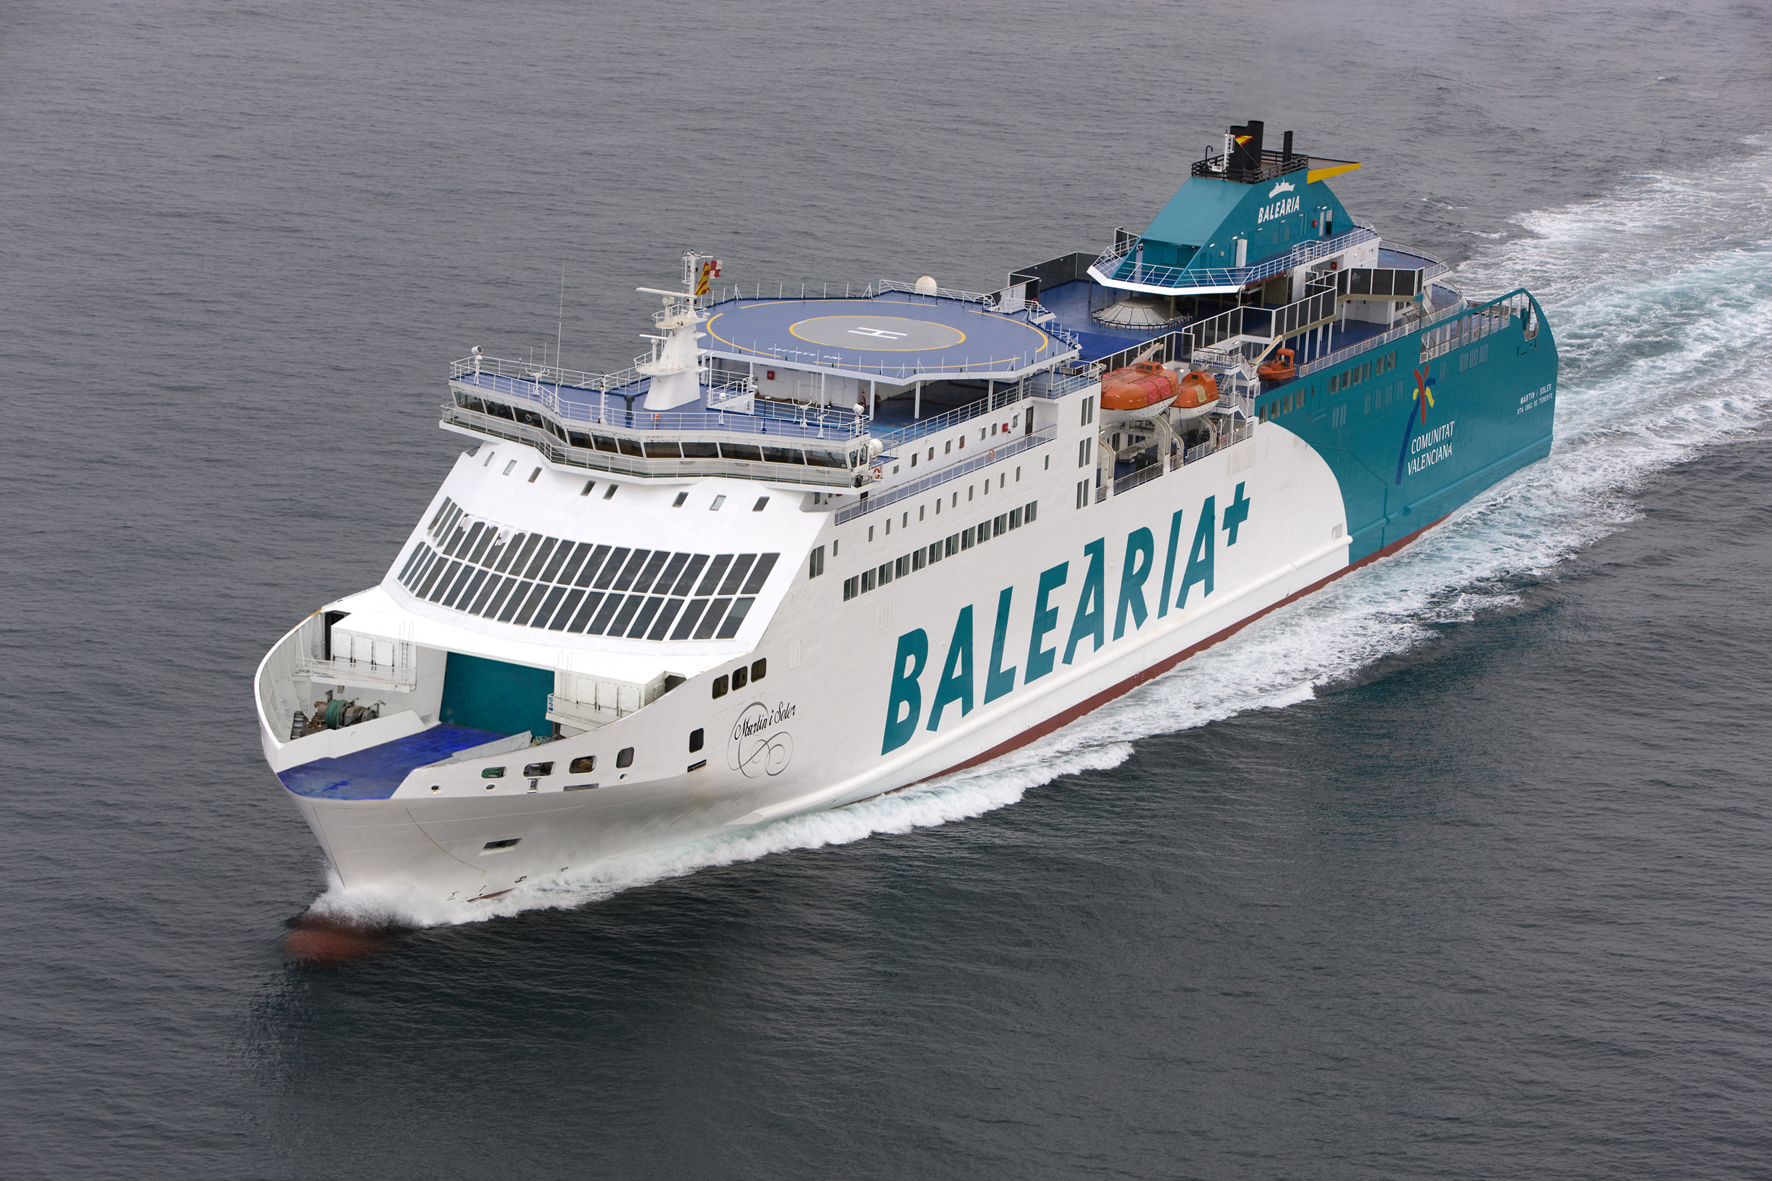 Ferry Martín i Soler Balearia